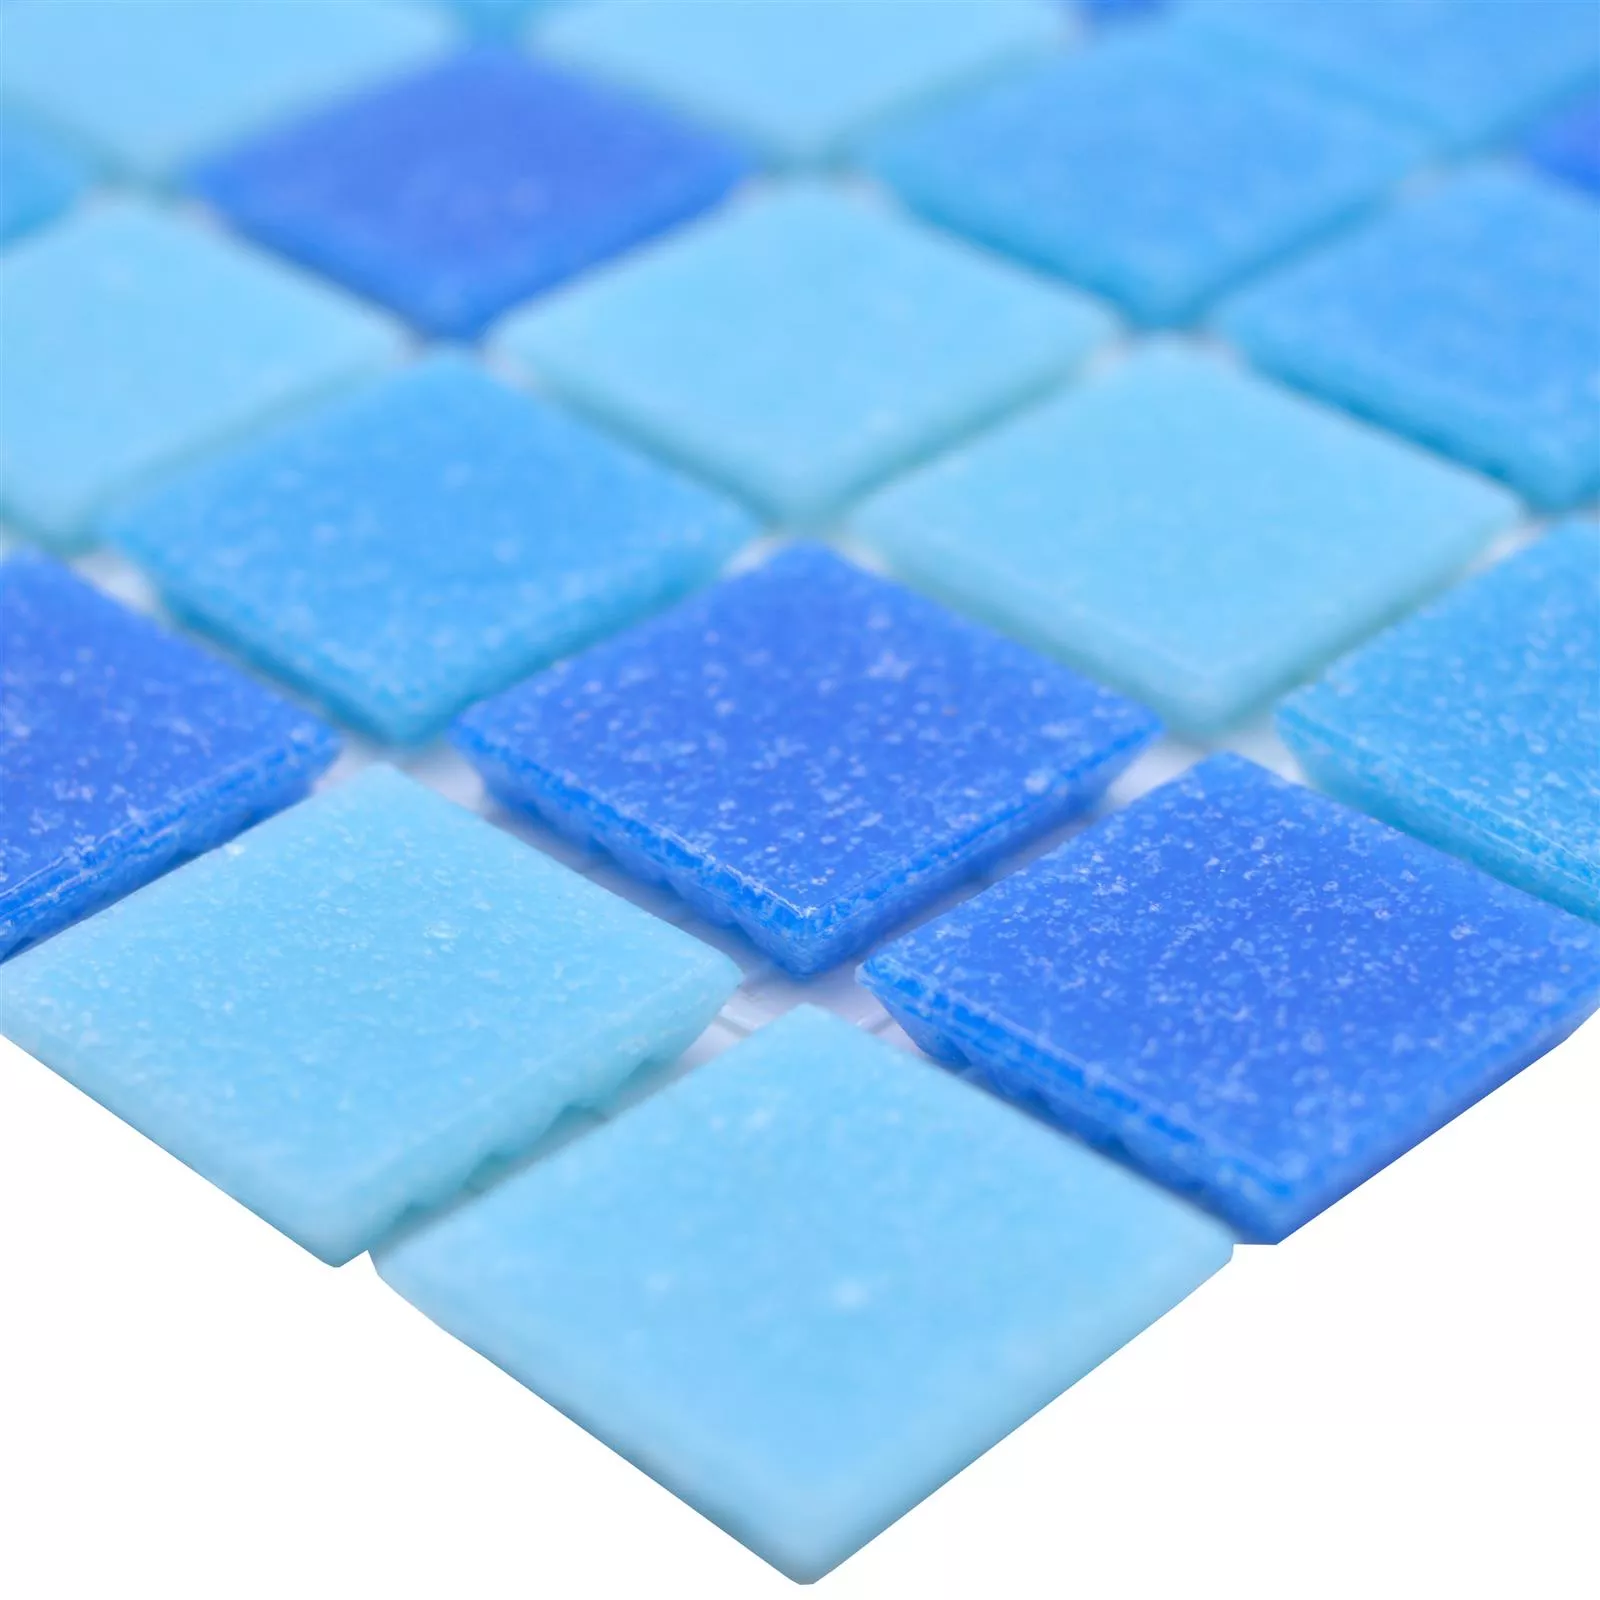 Piscina Mosaico North Sea Blu Turchese Mix